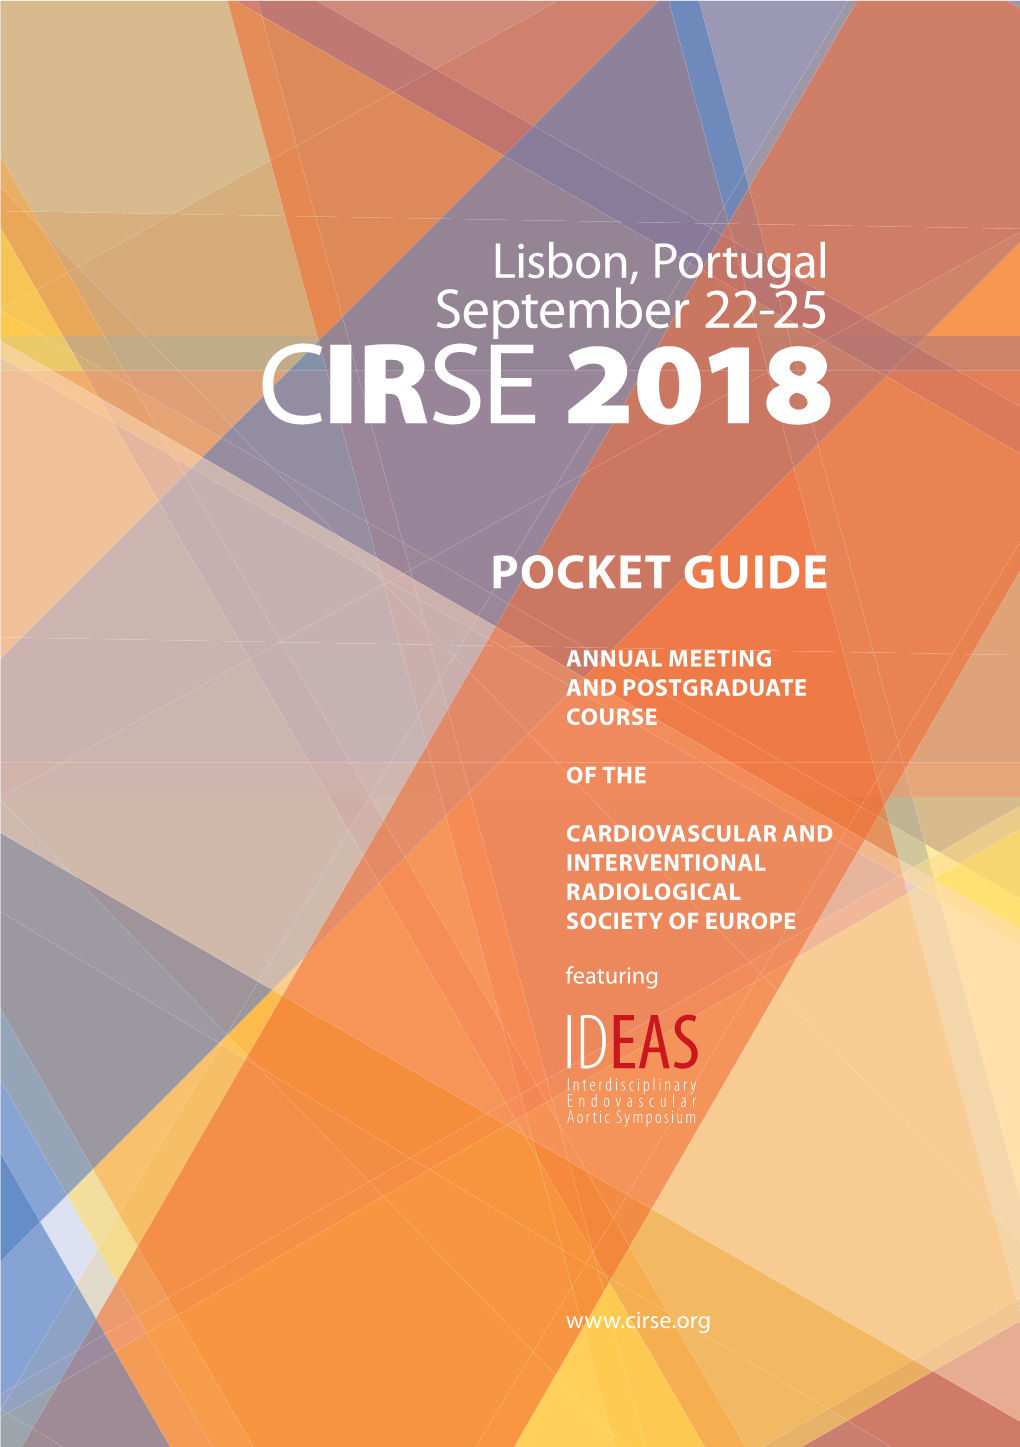 CIRSE 2018 Event in the CIRSE Society App